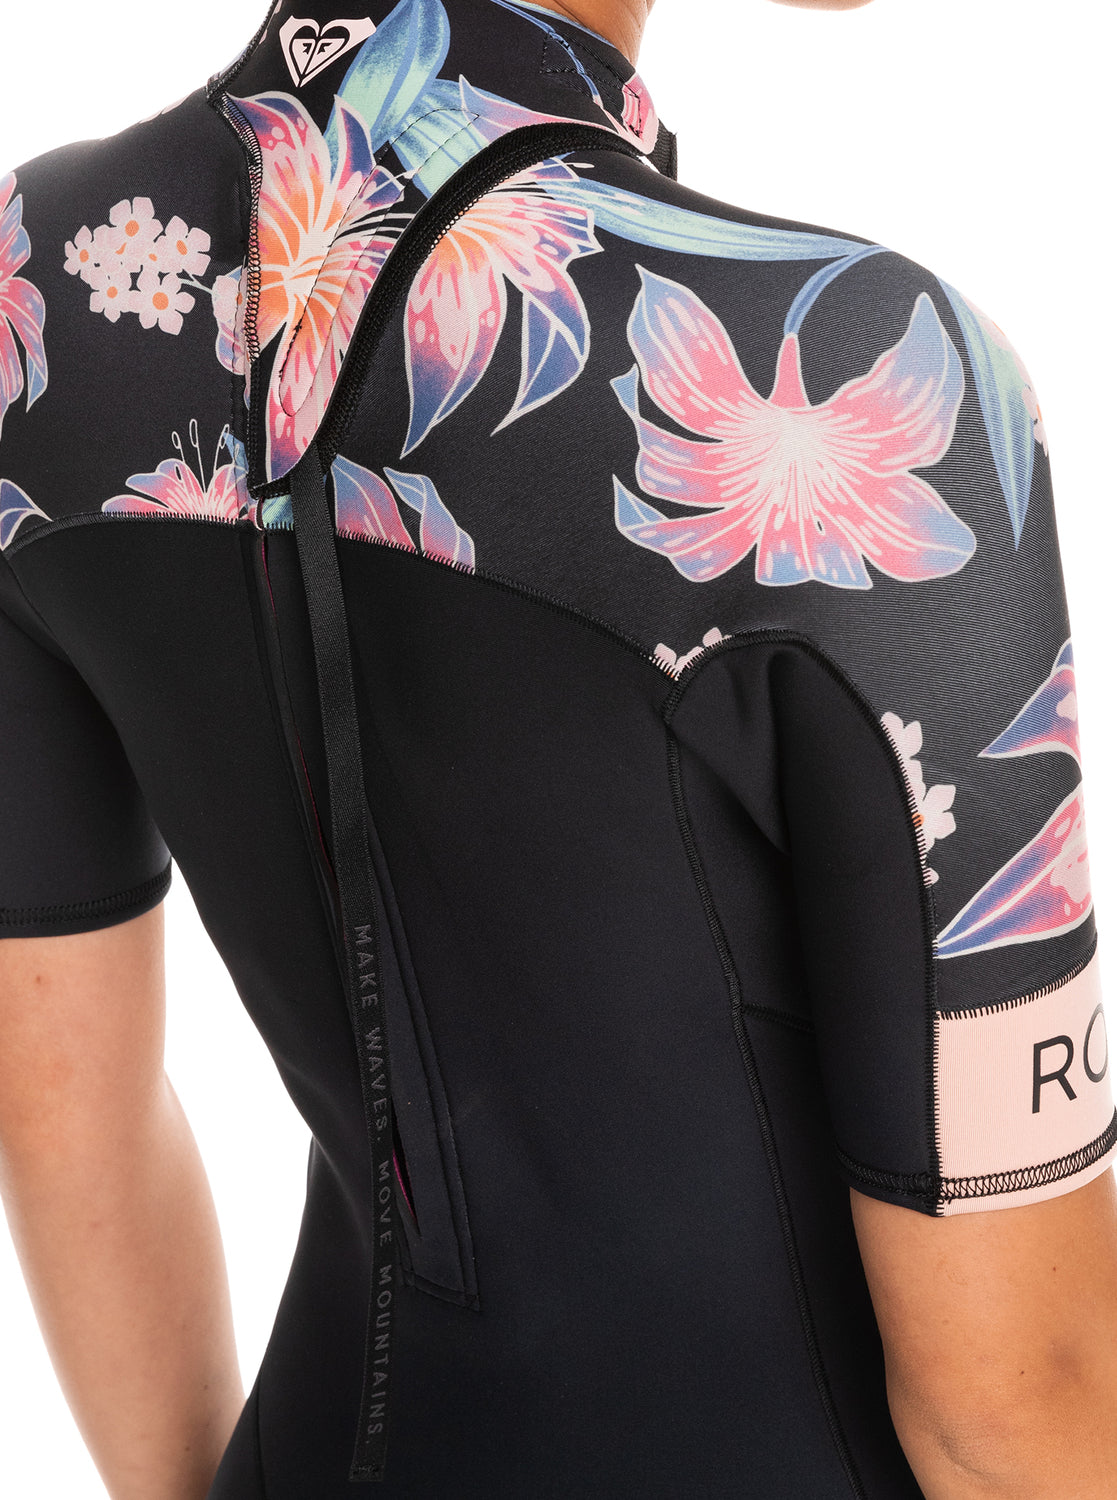 ROXY Womens 2mm Swell Series Short Sleeve Back Zip Springsuit